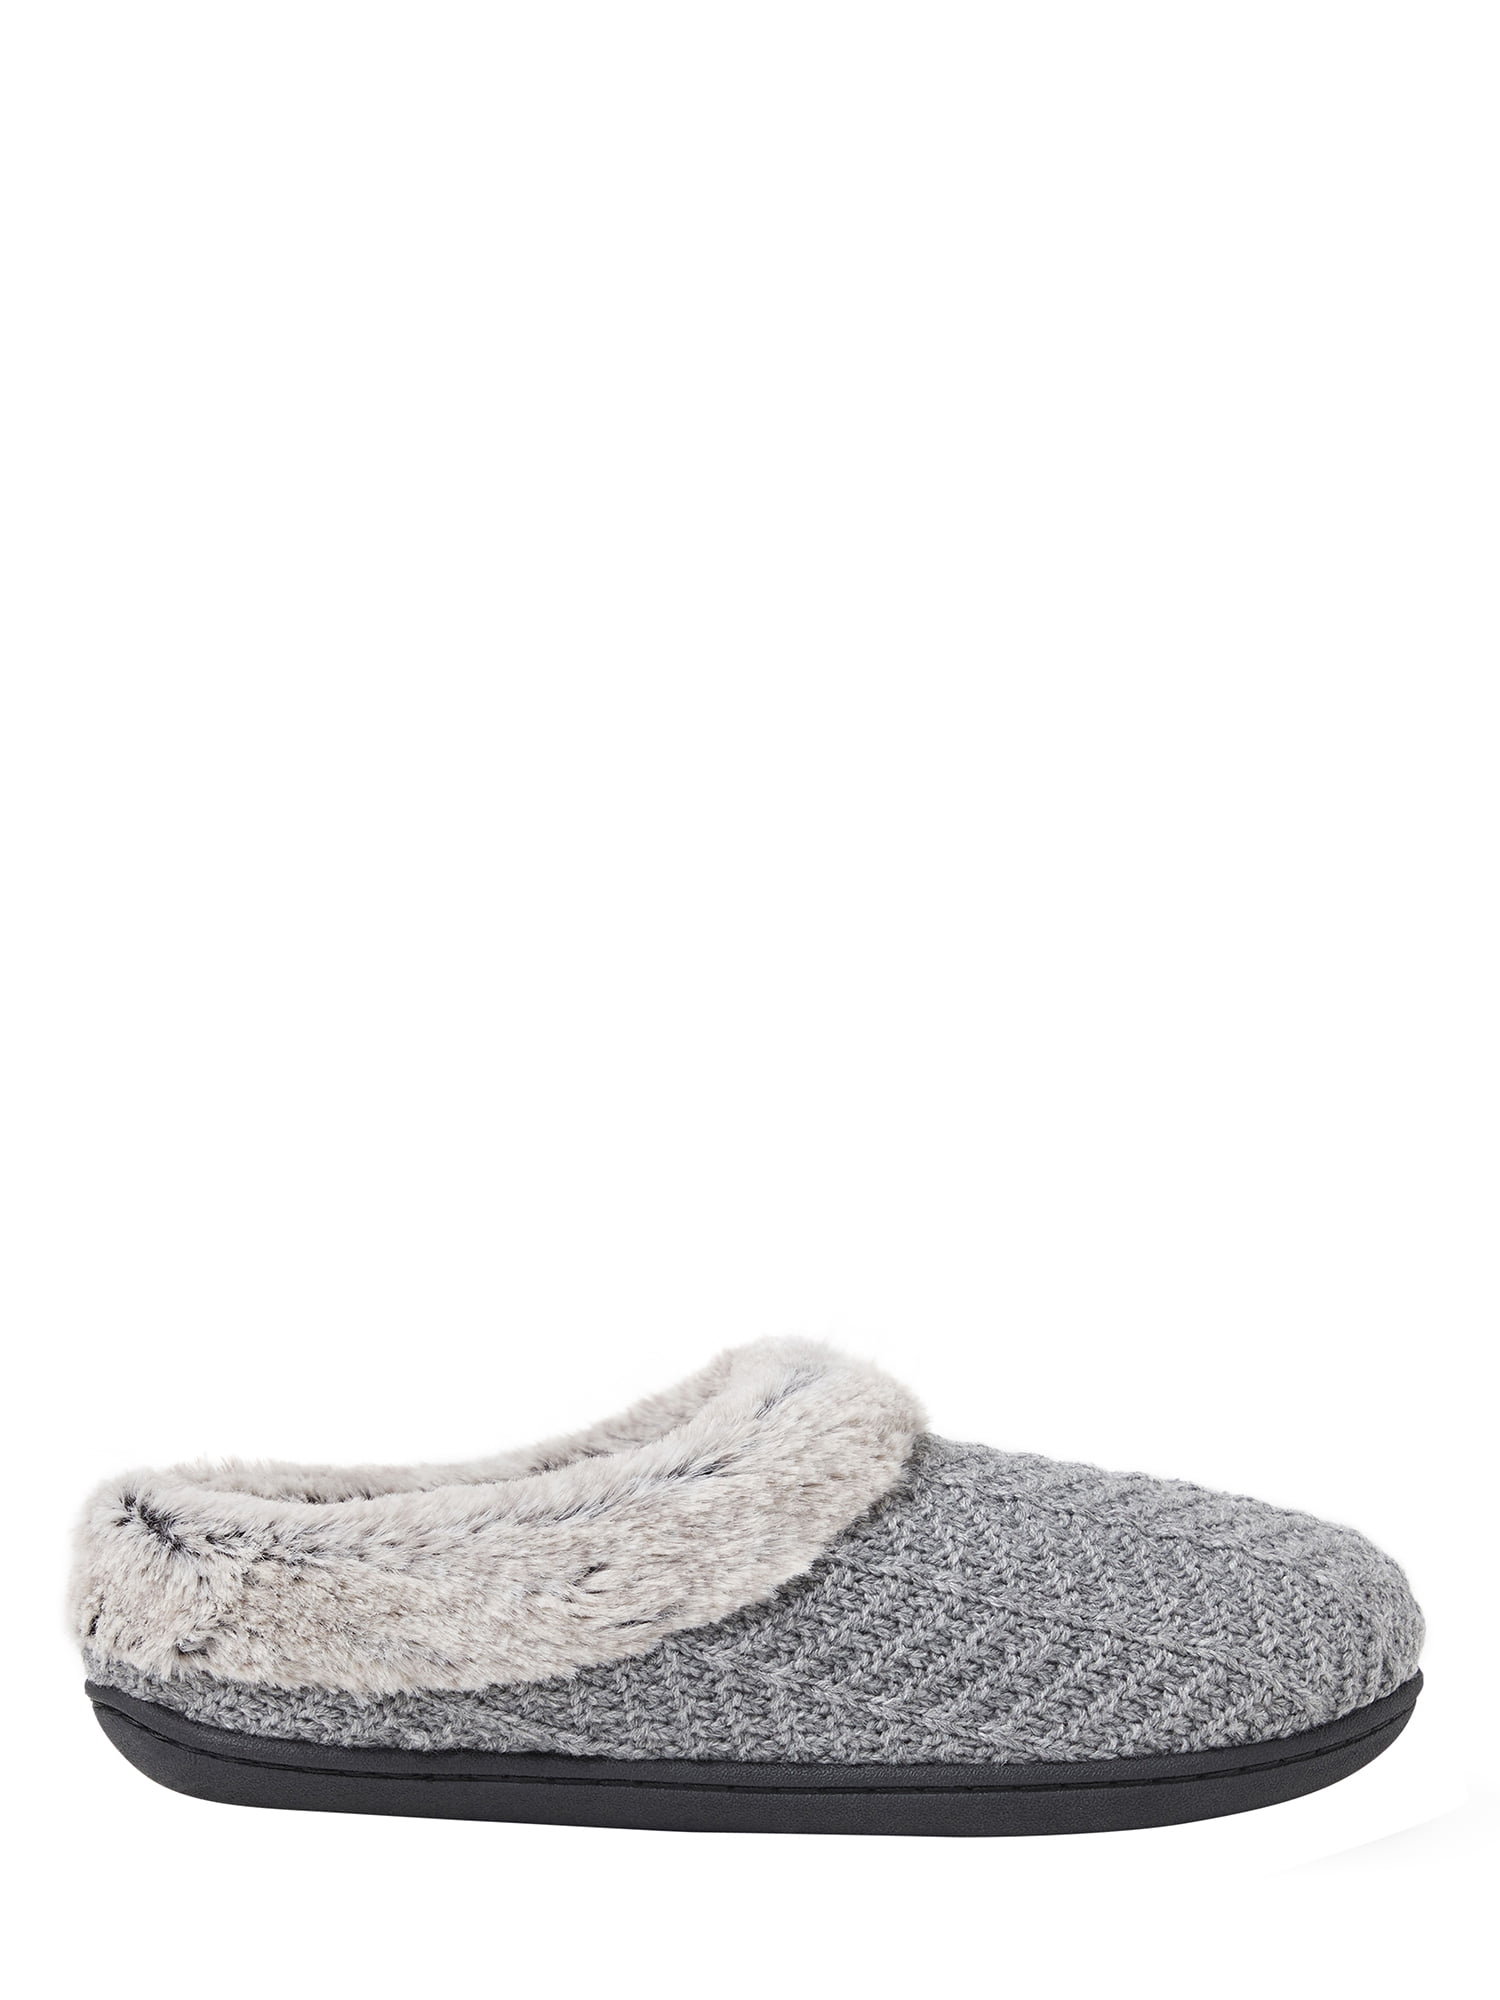 DF by Dearfoams Women's Textured Knit Clog slippers - Walmart.com